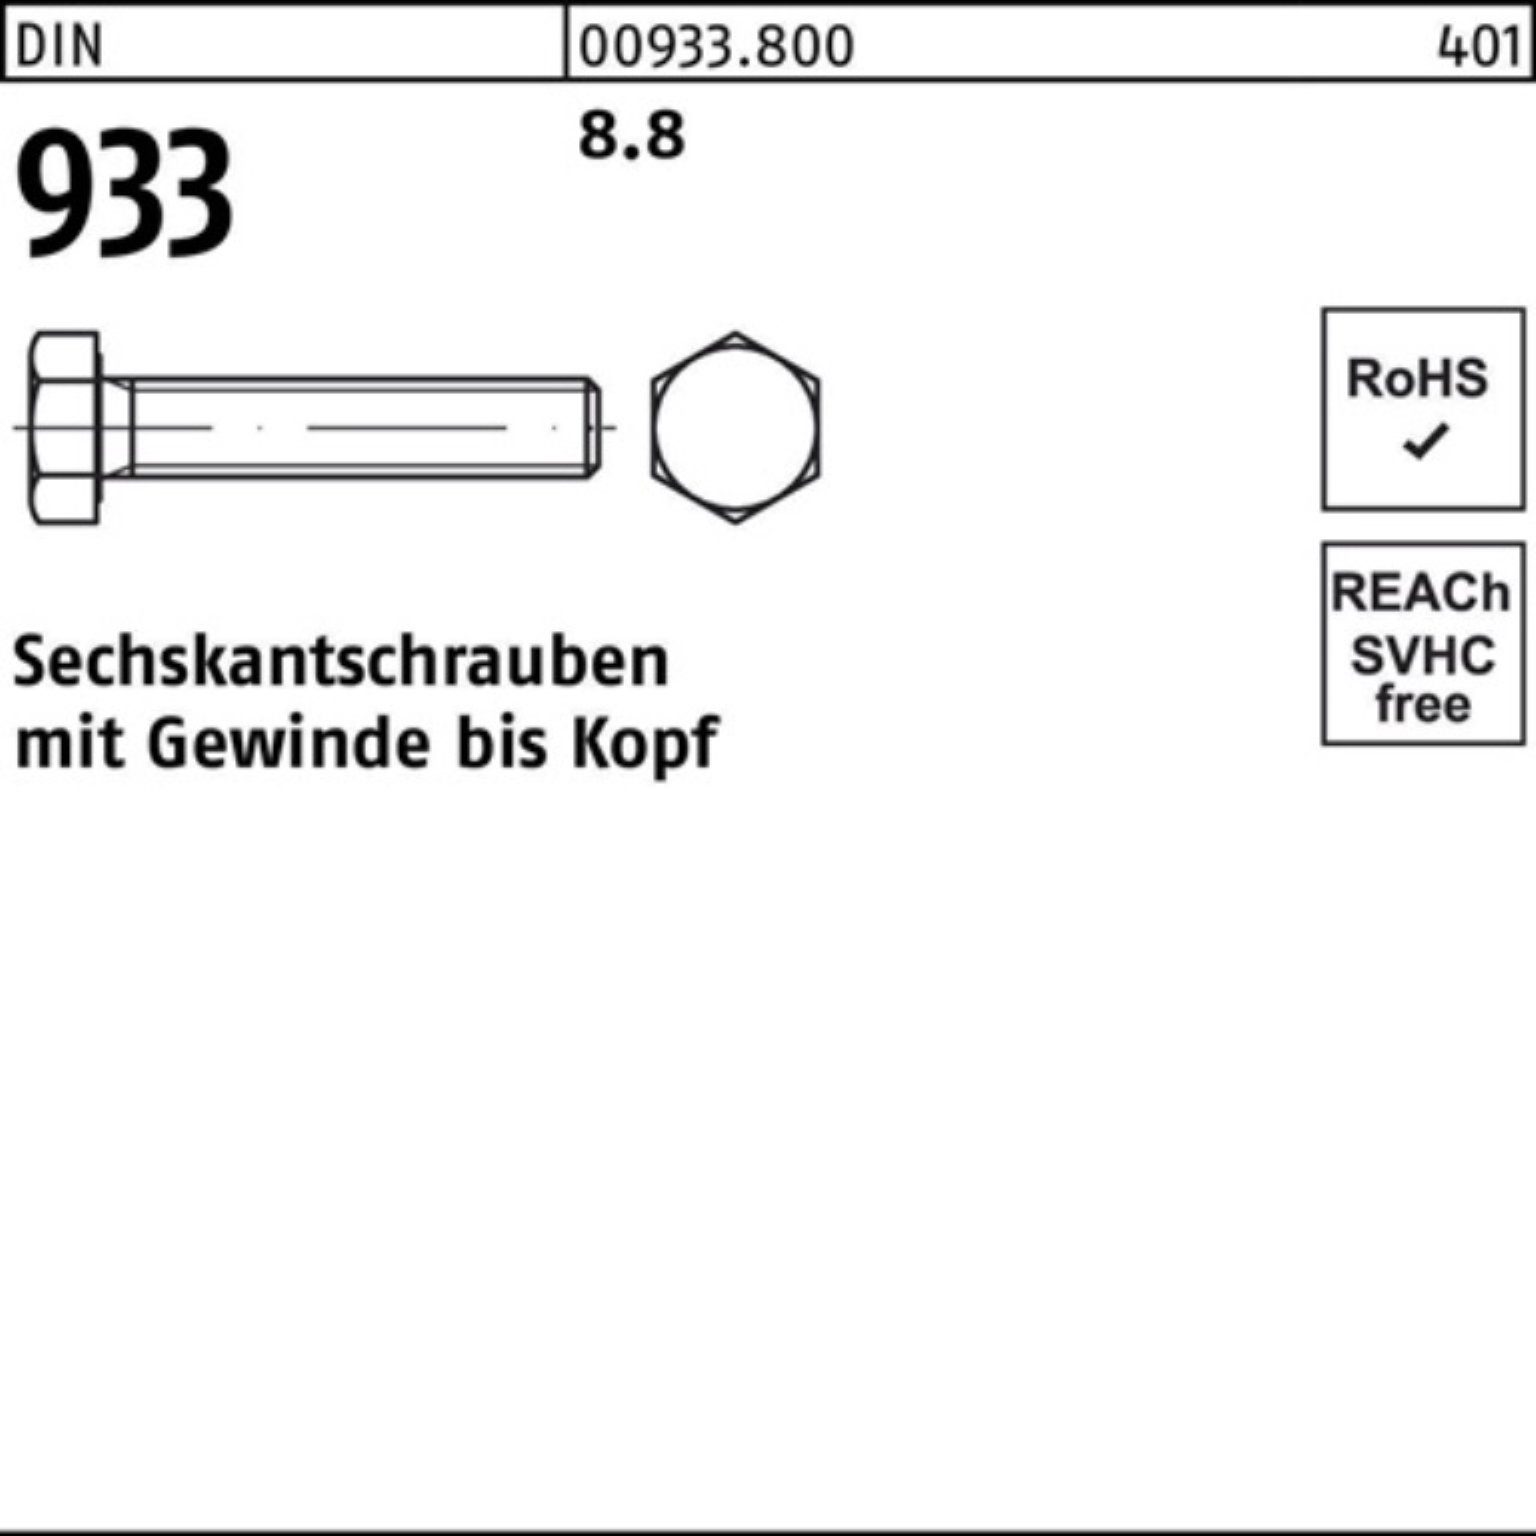 VG M5x Reyher Stück Sechskantschraube 8.8 DIN Pack DIN 200er 933 70 200 Sechskantschraube 933